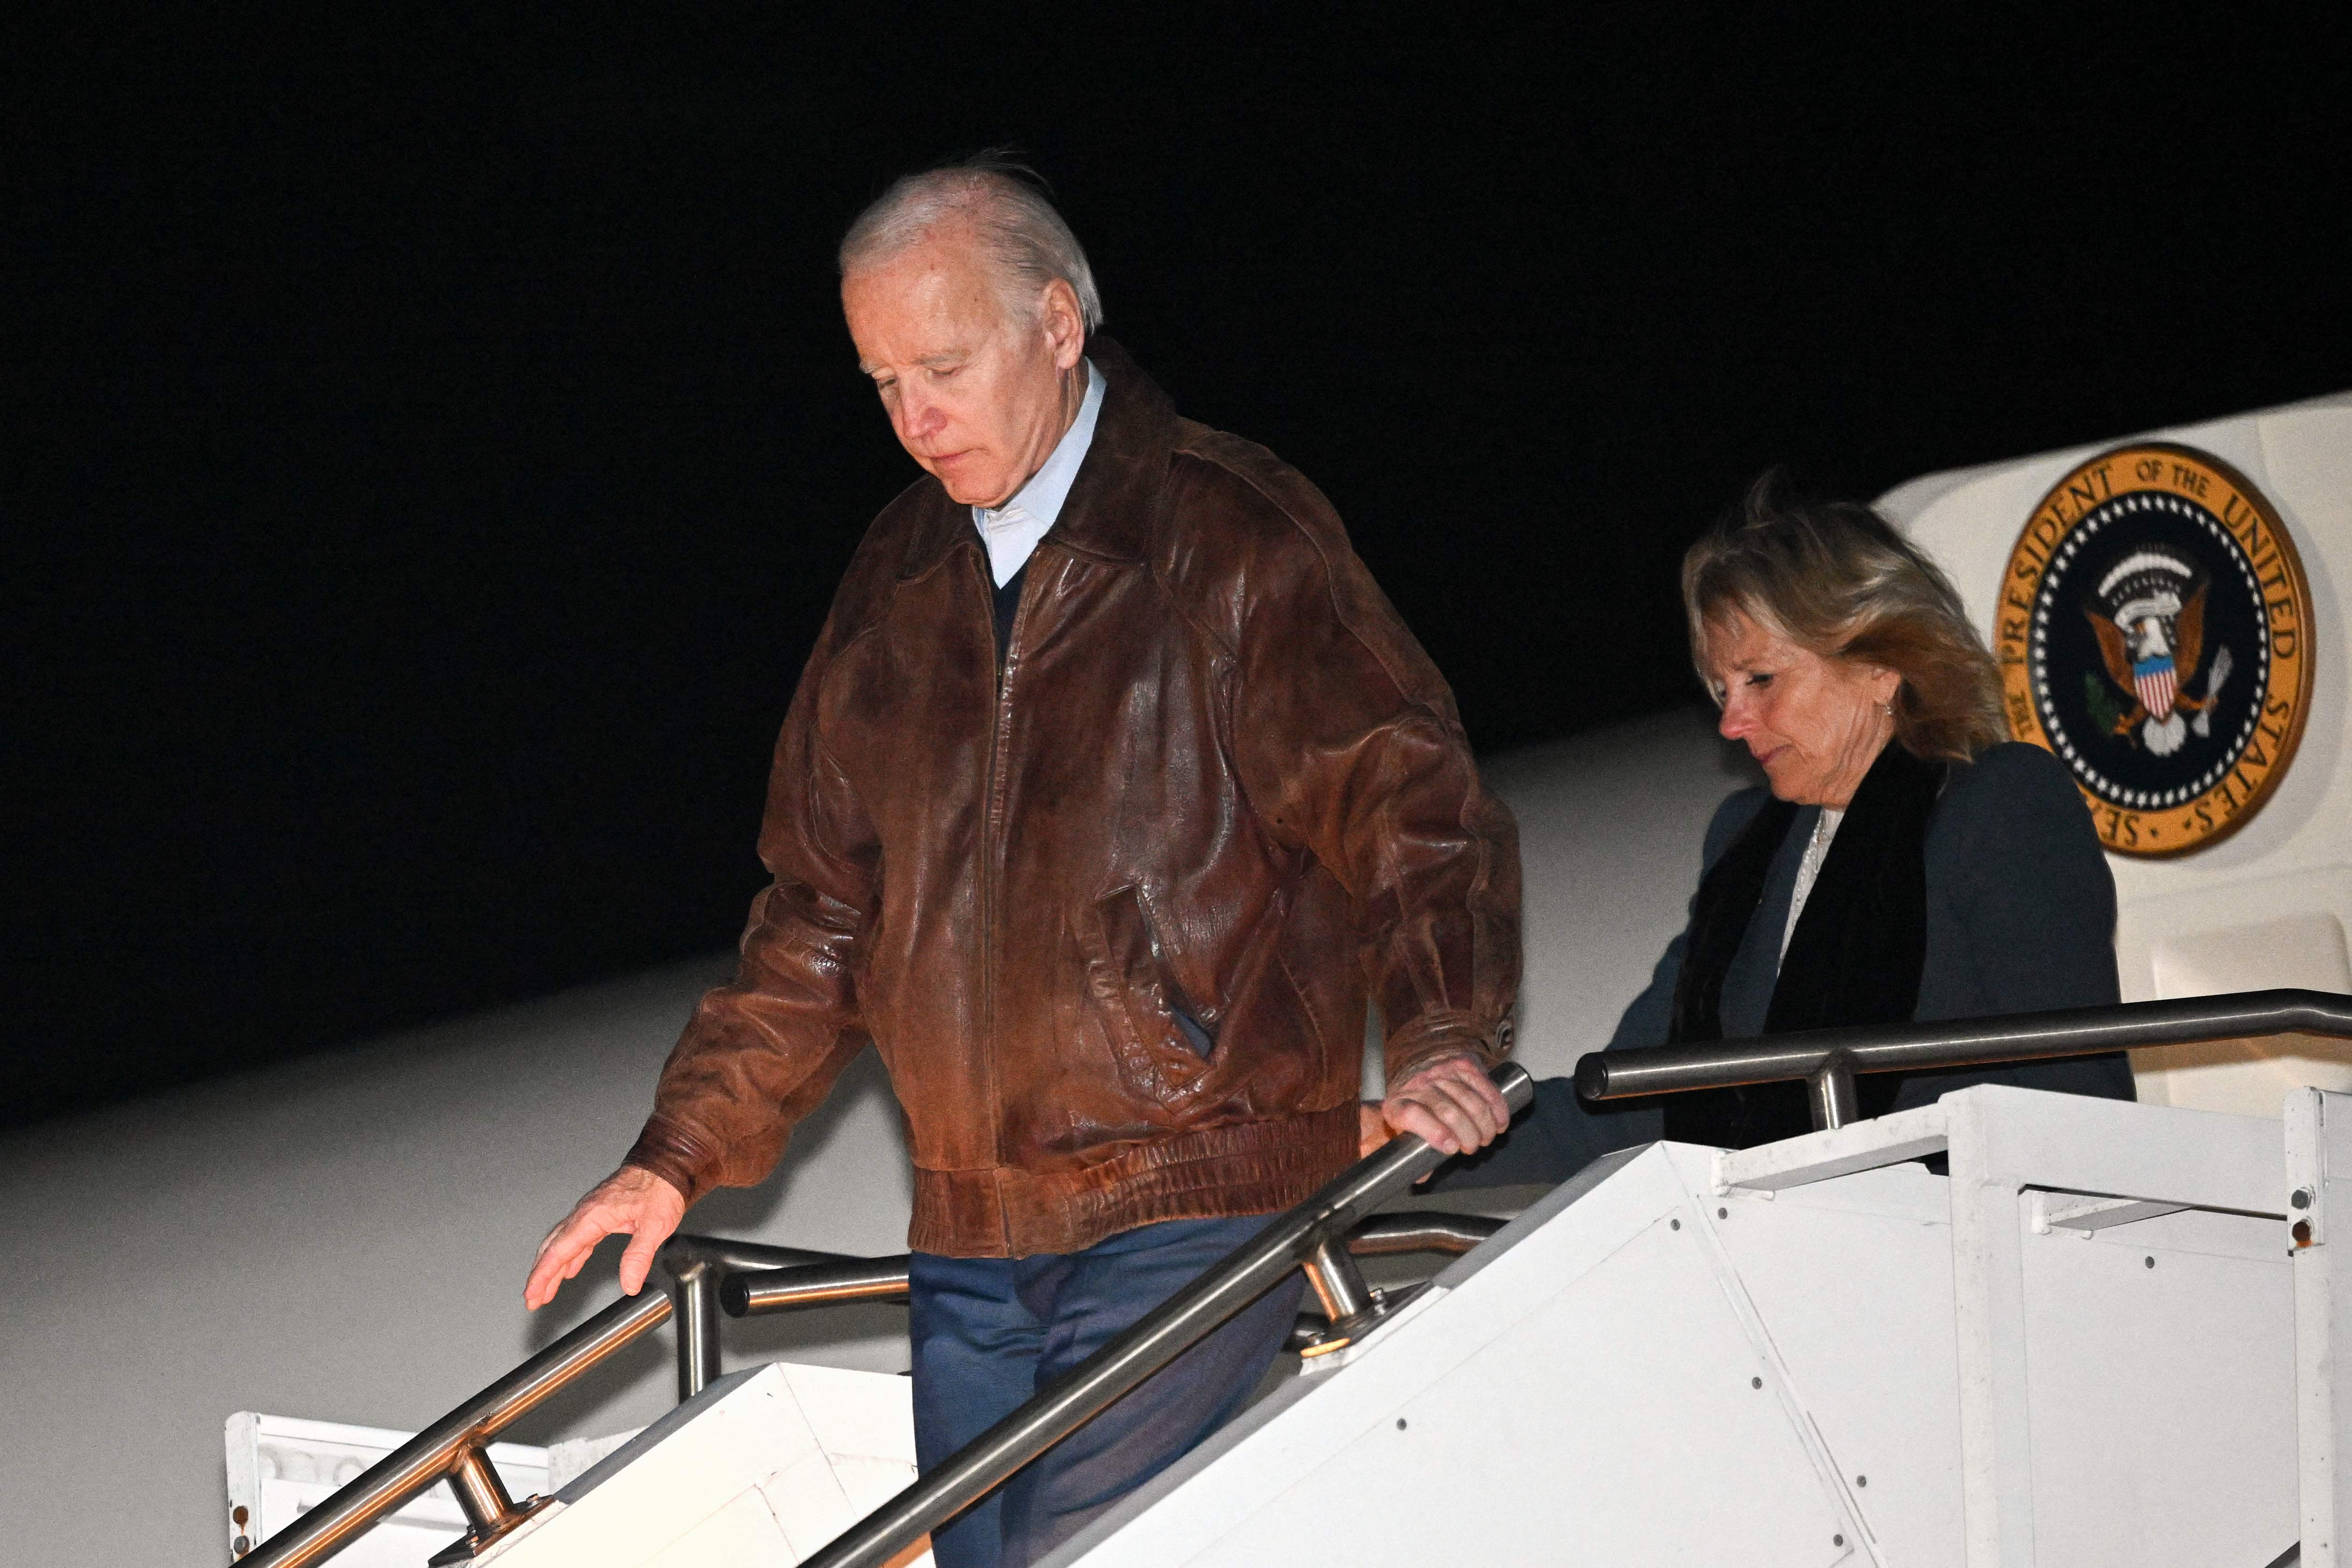 President Joe Biden and First Lady Jill Biden arrive in Massachusetts on 22 November.